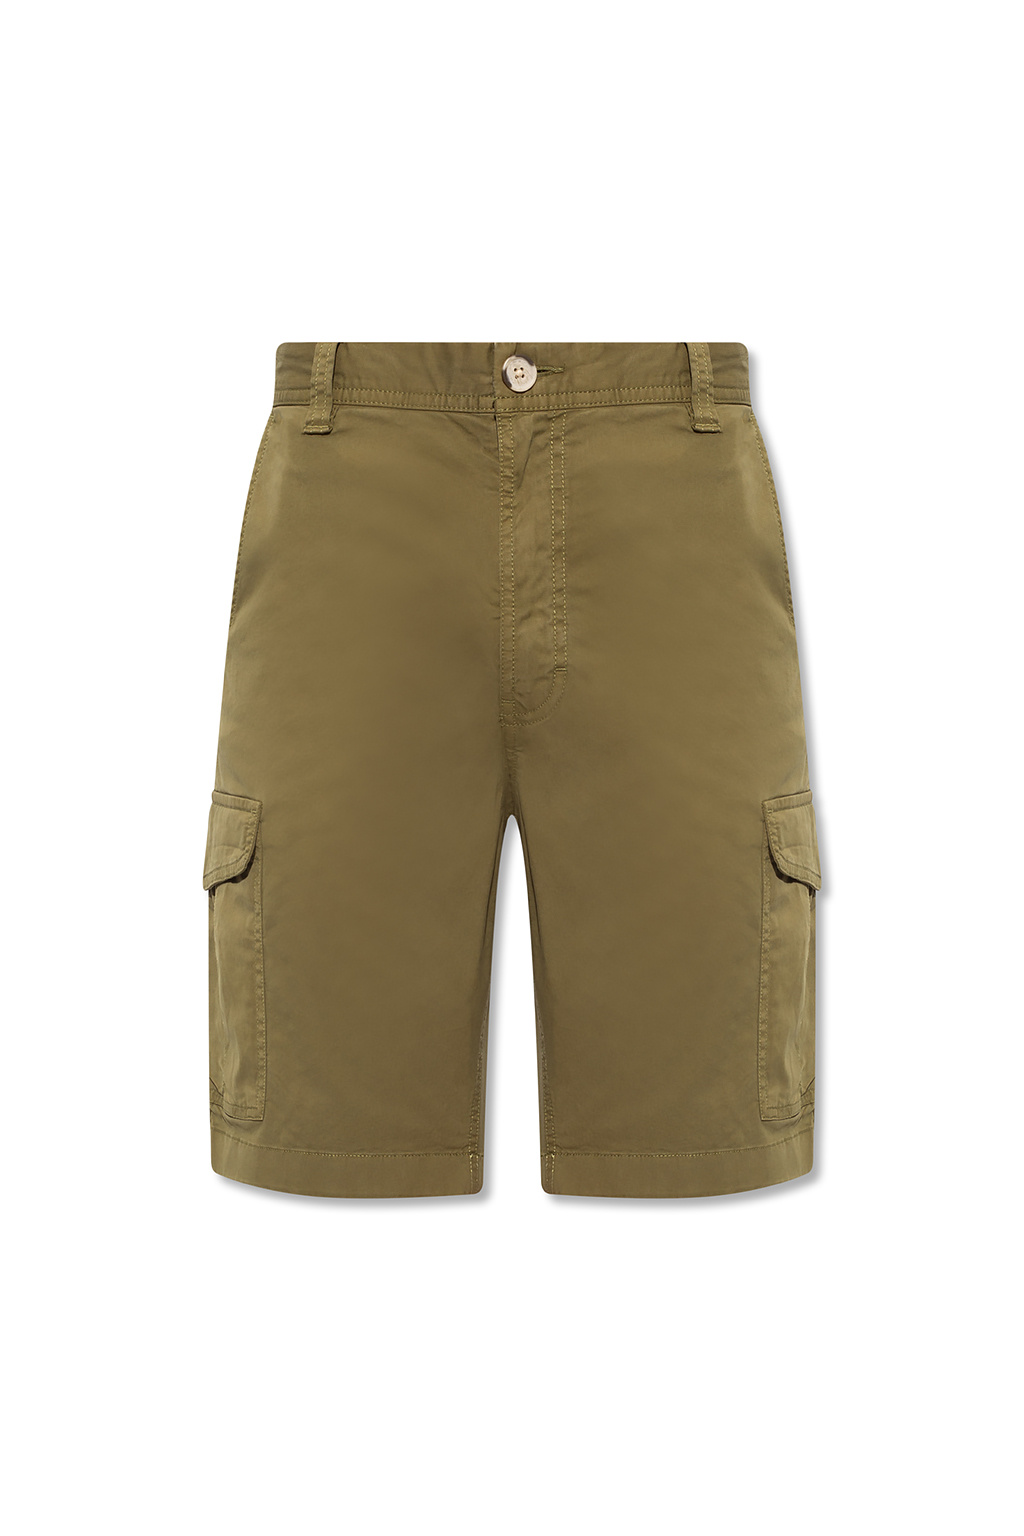 Woolrich Cargo shorts